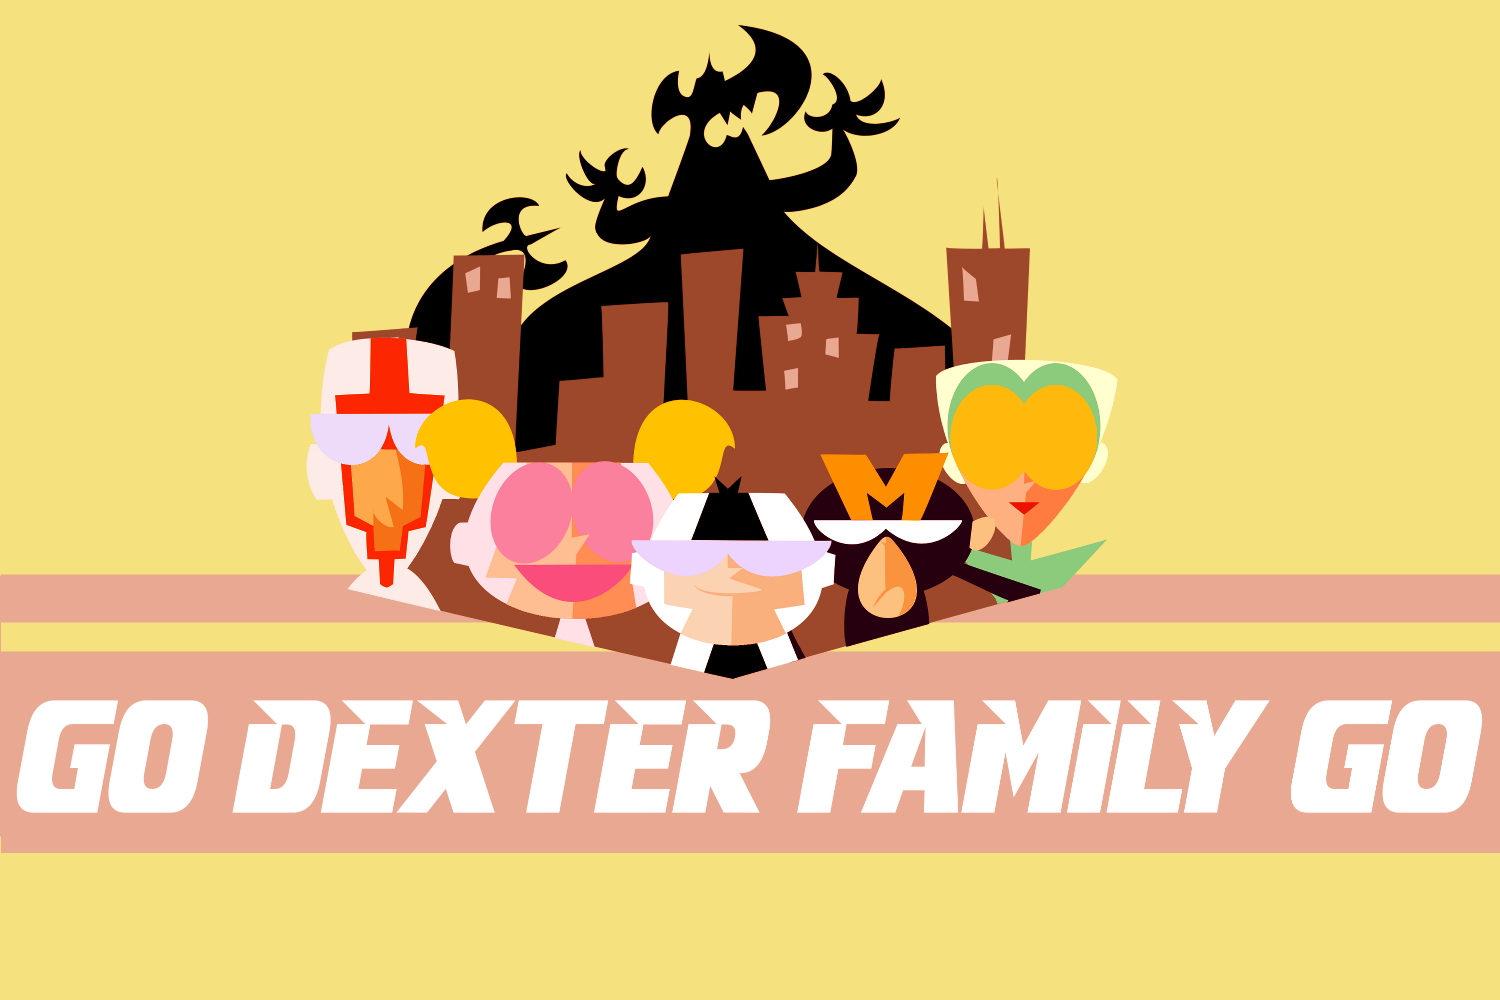 Go dexter family - wallpaper pack by Wickfield on DeviantArt